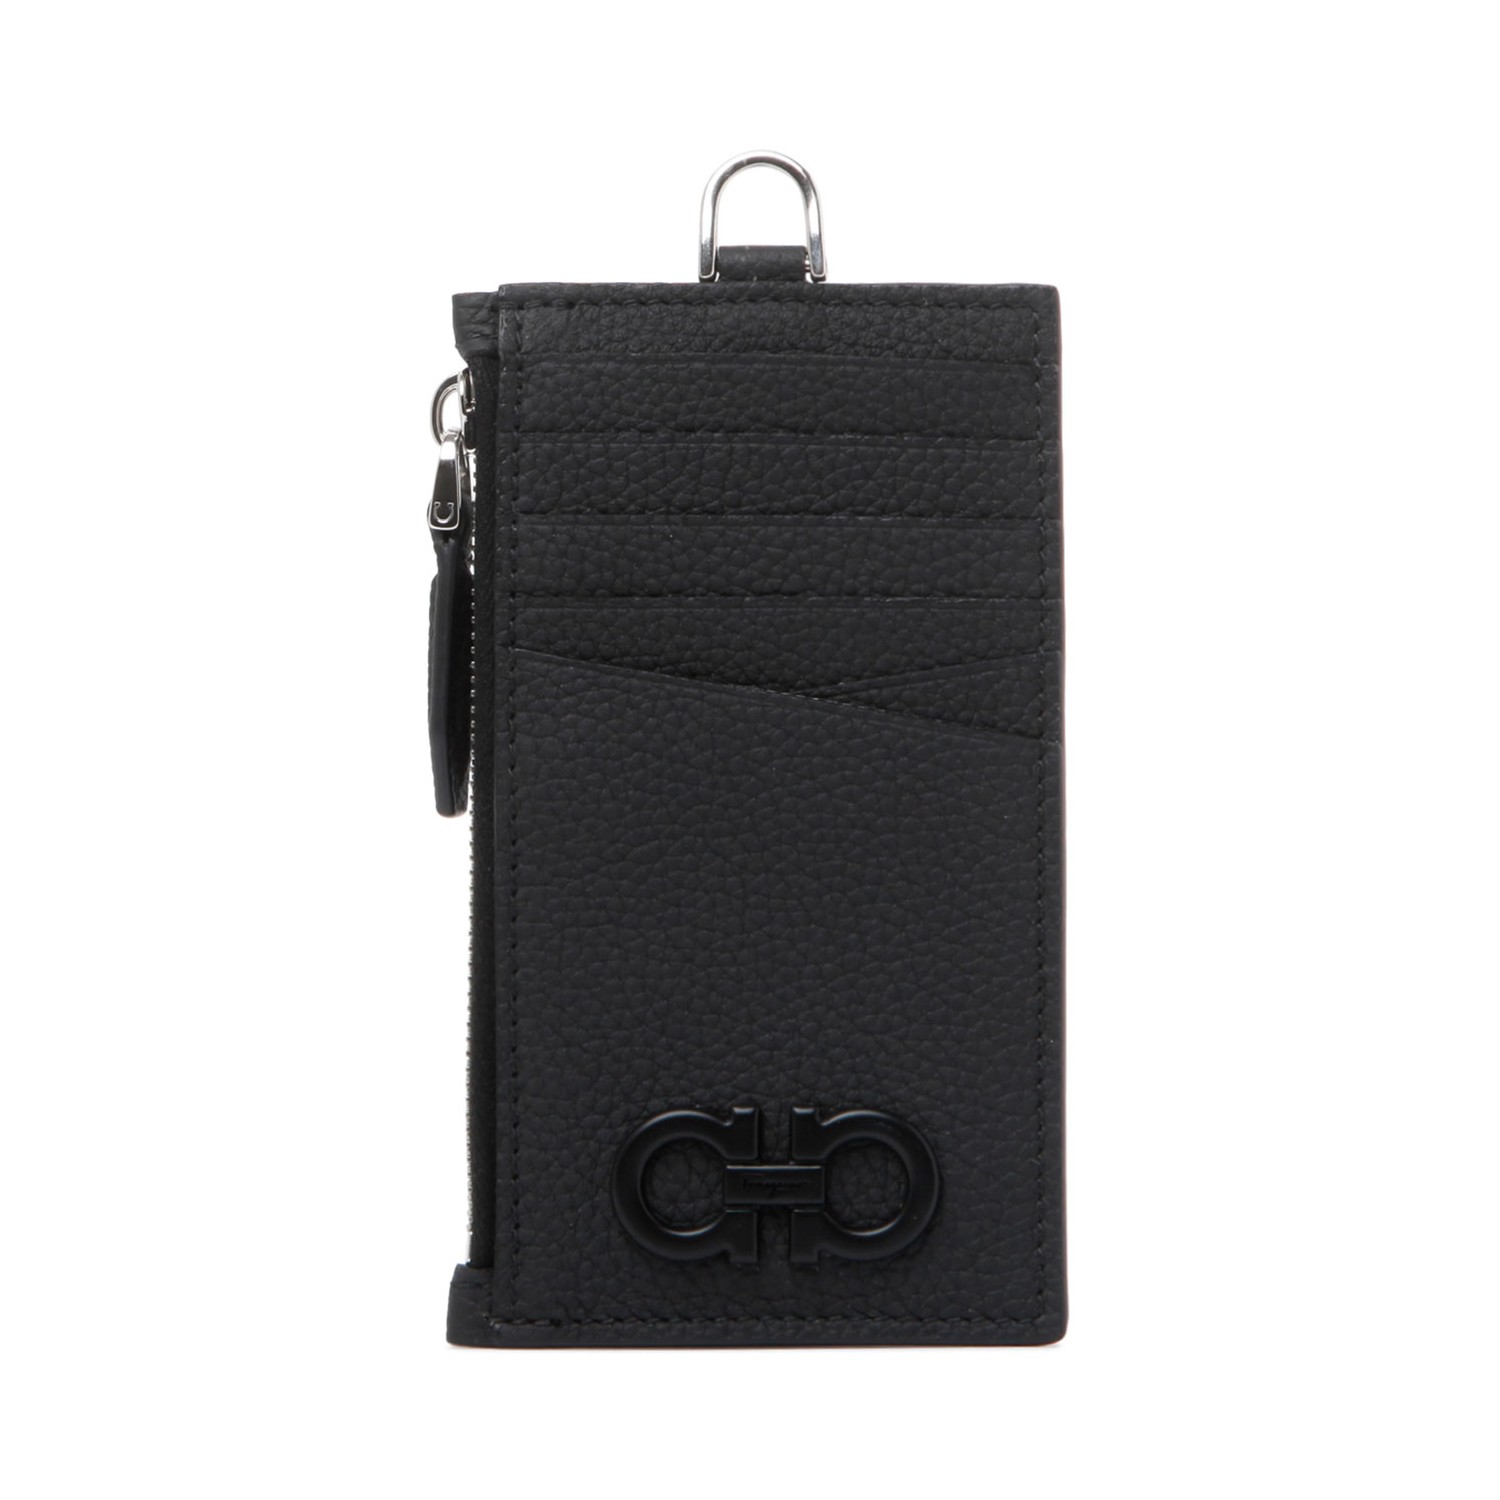 Ferragamo Black Calf Leather Card Holder With Strap.